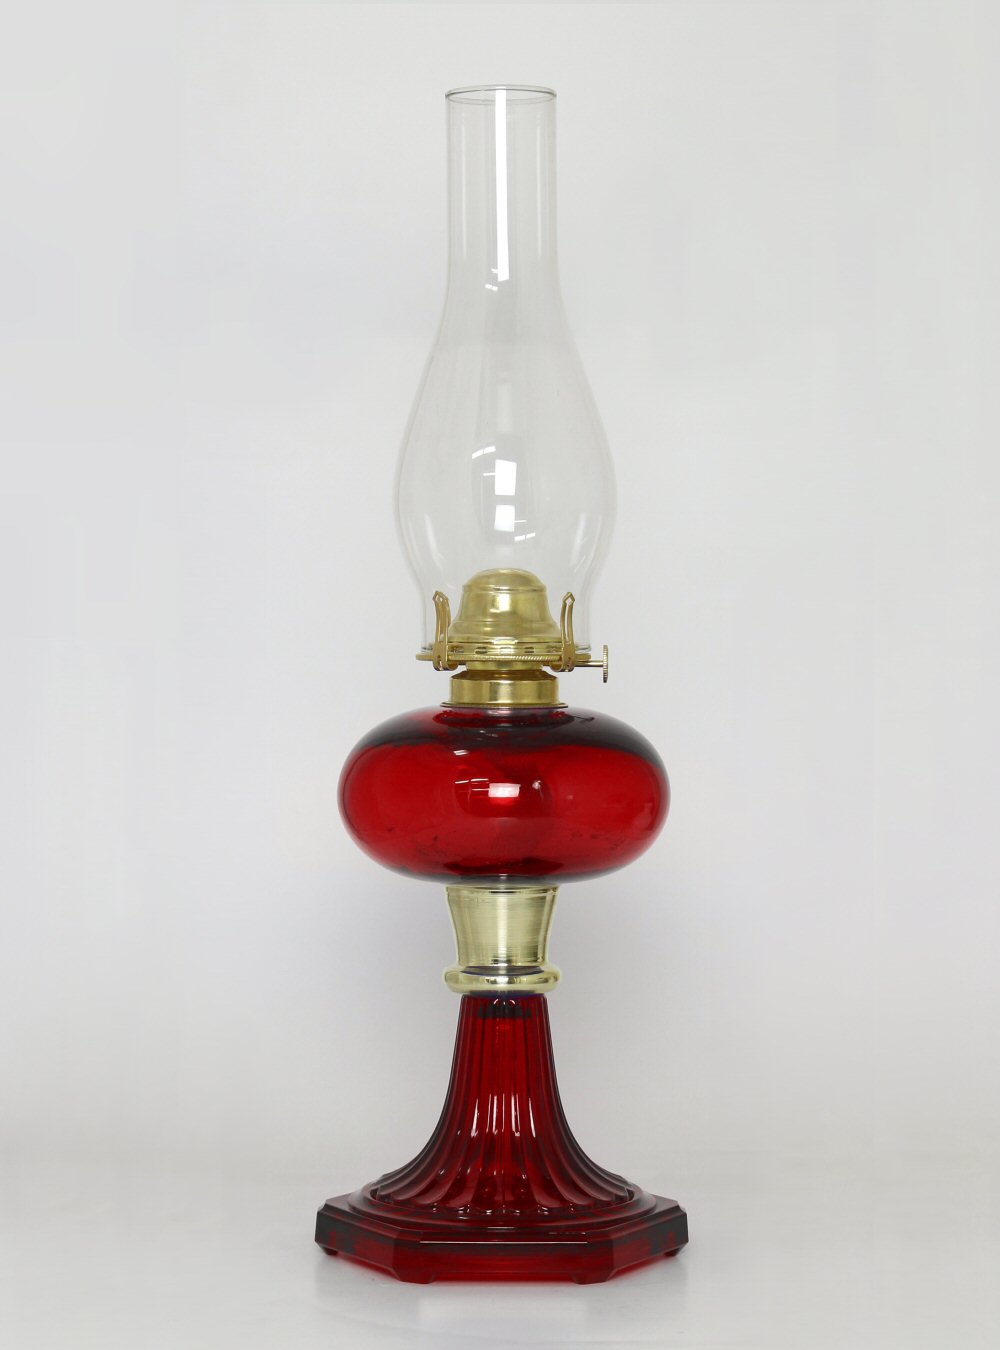 verkorten groei Grootte W.T. Kirkman "Palomar" #95 Table Lamp w/#2 Queen Anne Burner - The Source  for Oil Lamps and Hurricane Lanterns